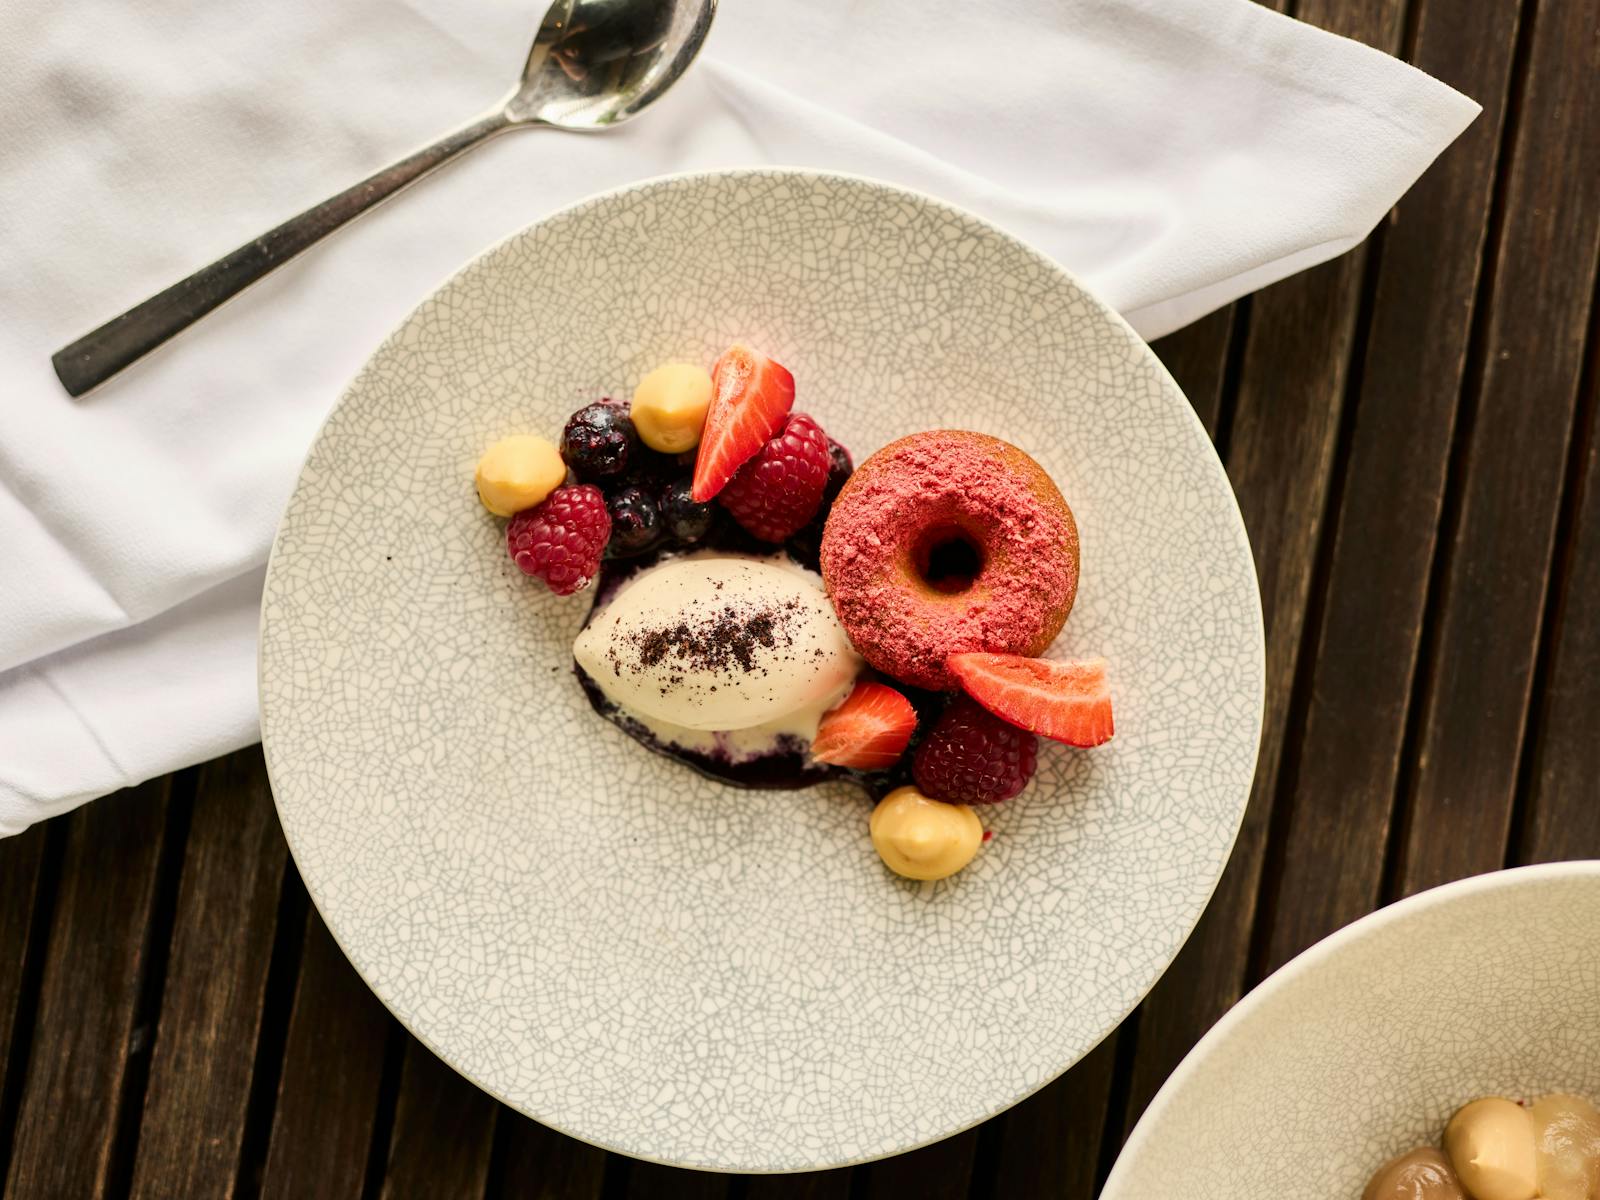 A dessert of berries and cream at Josef Chromy Restaurant